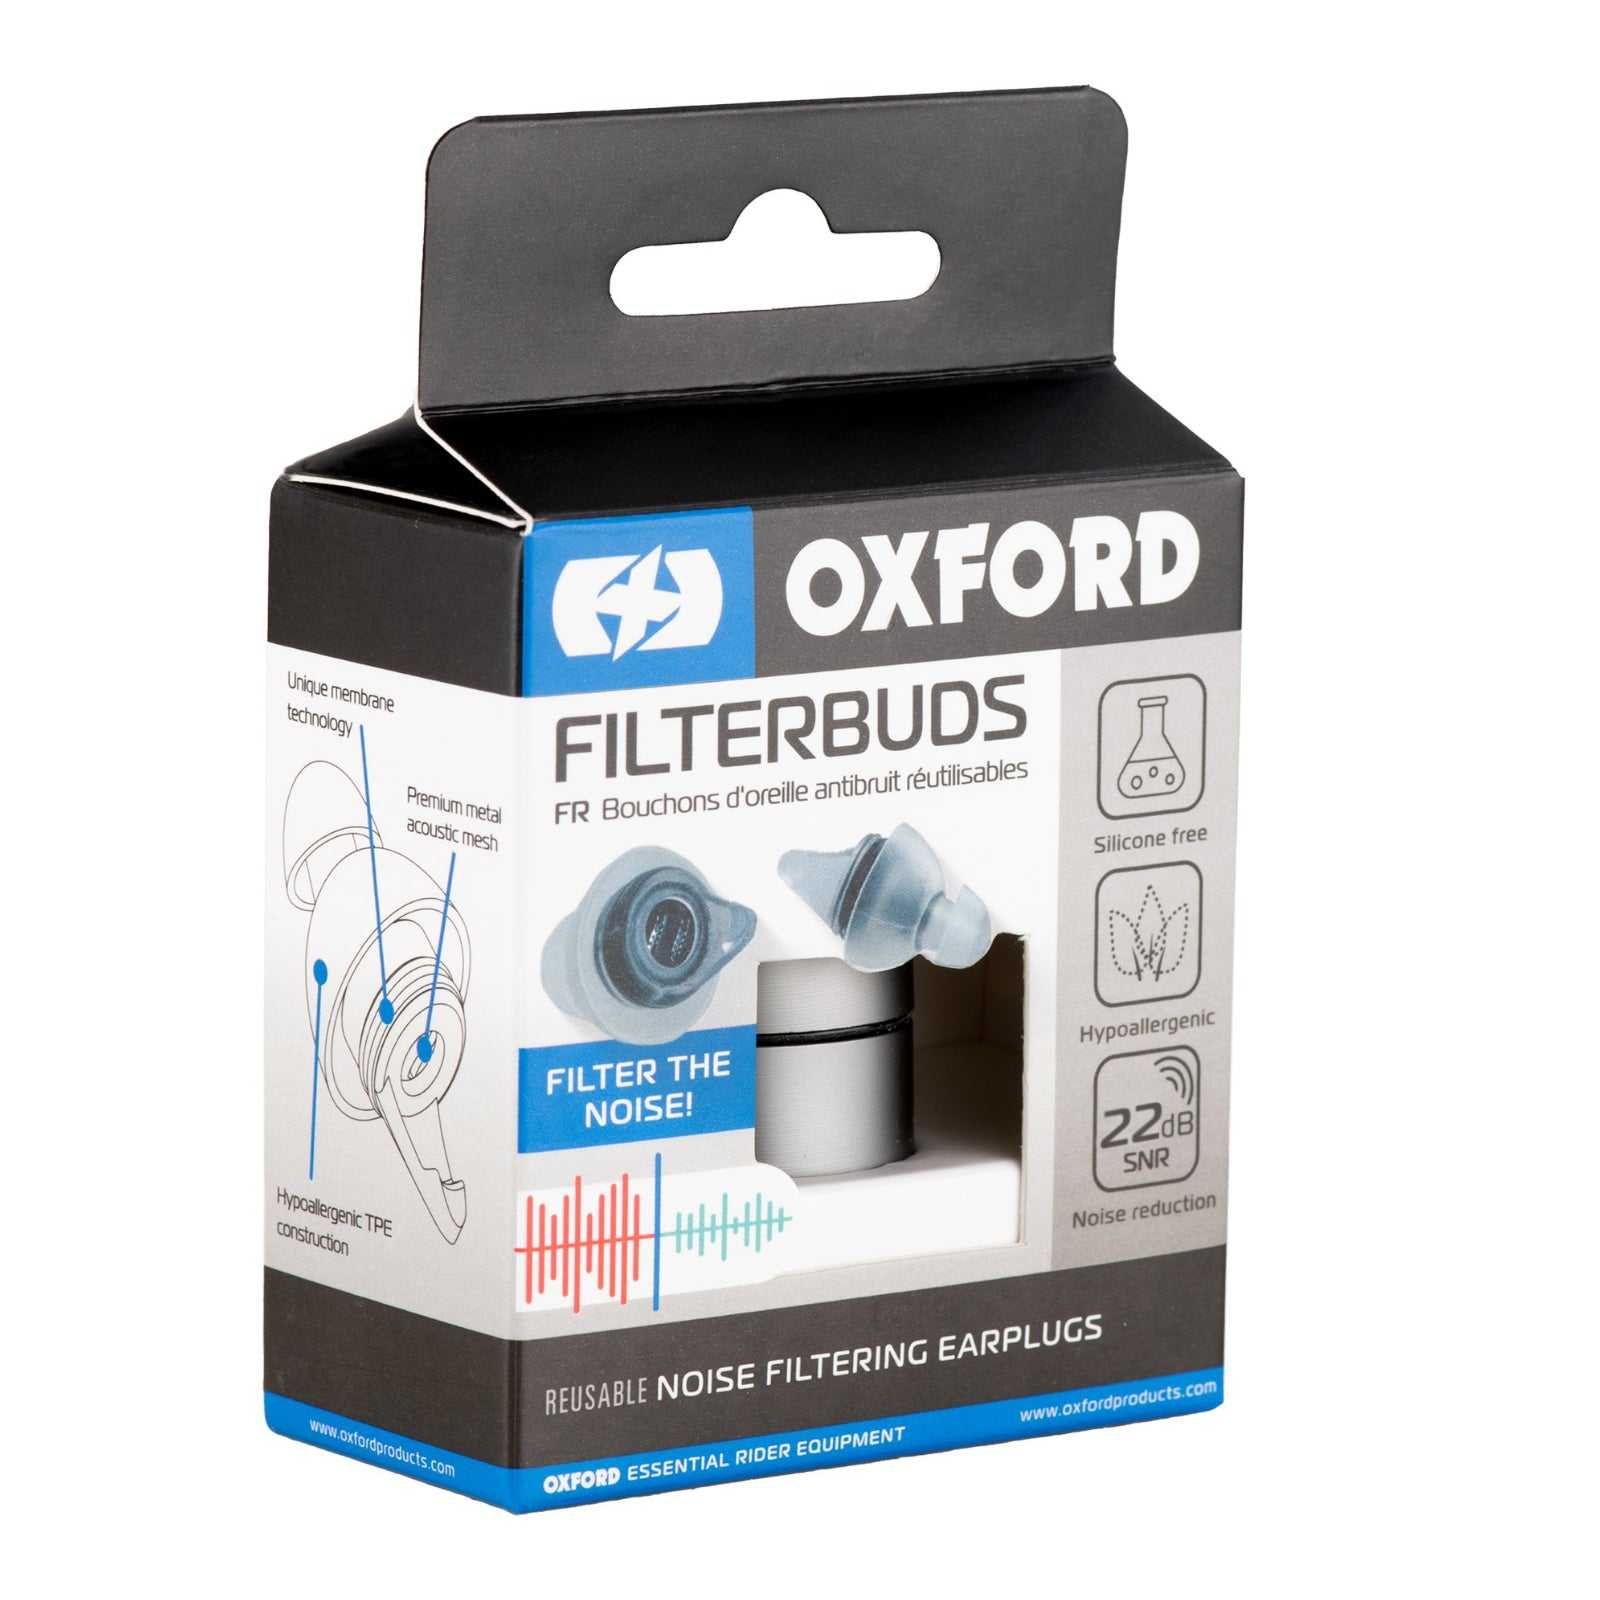 Oxford, Oxford Filterbuds